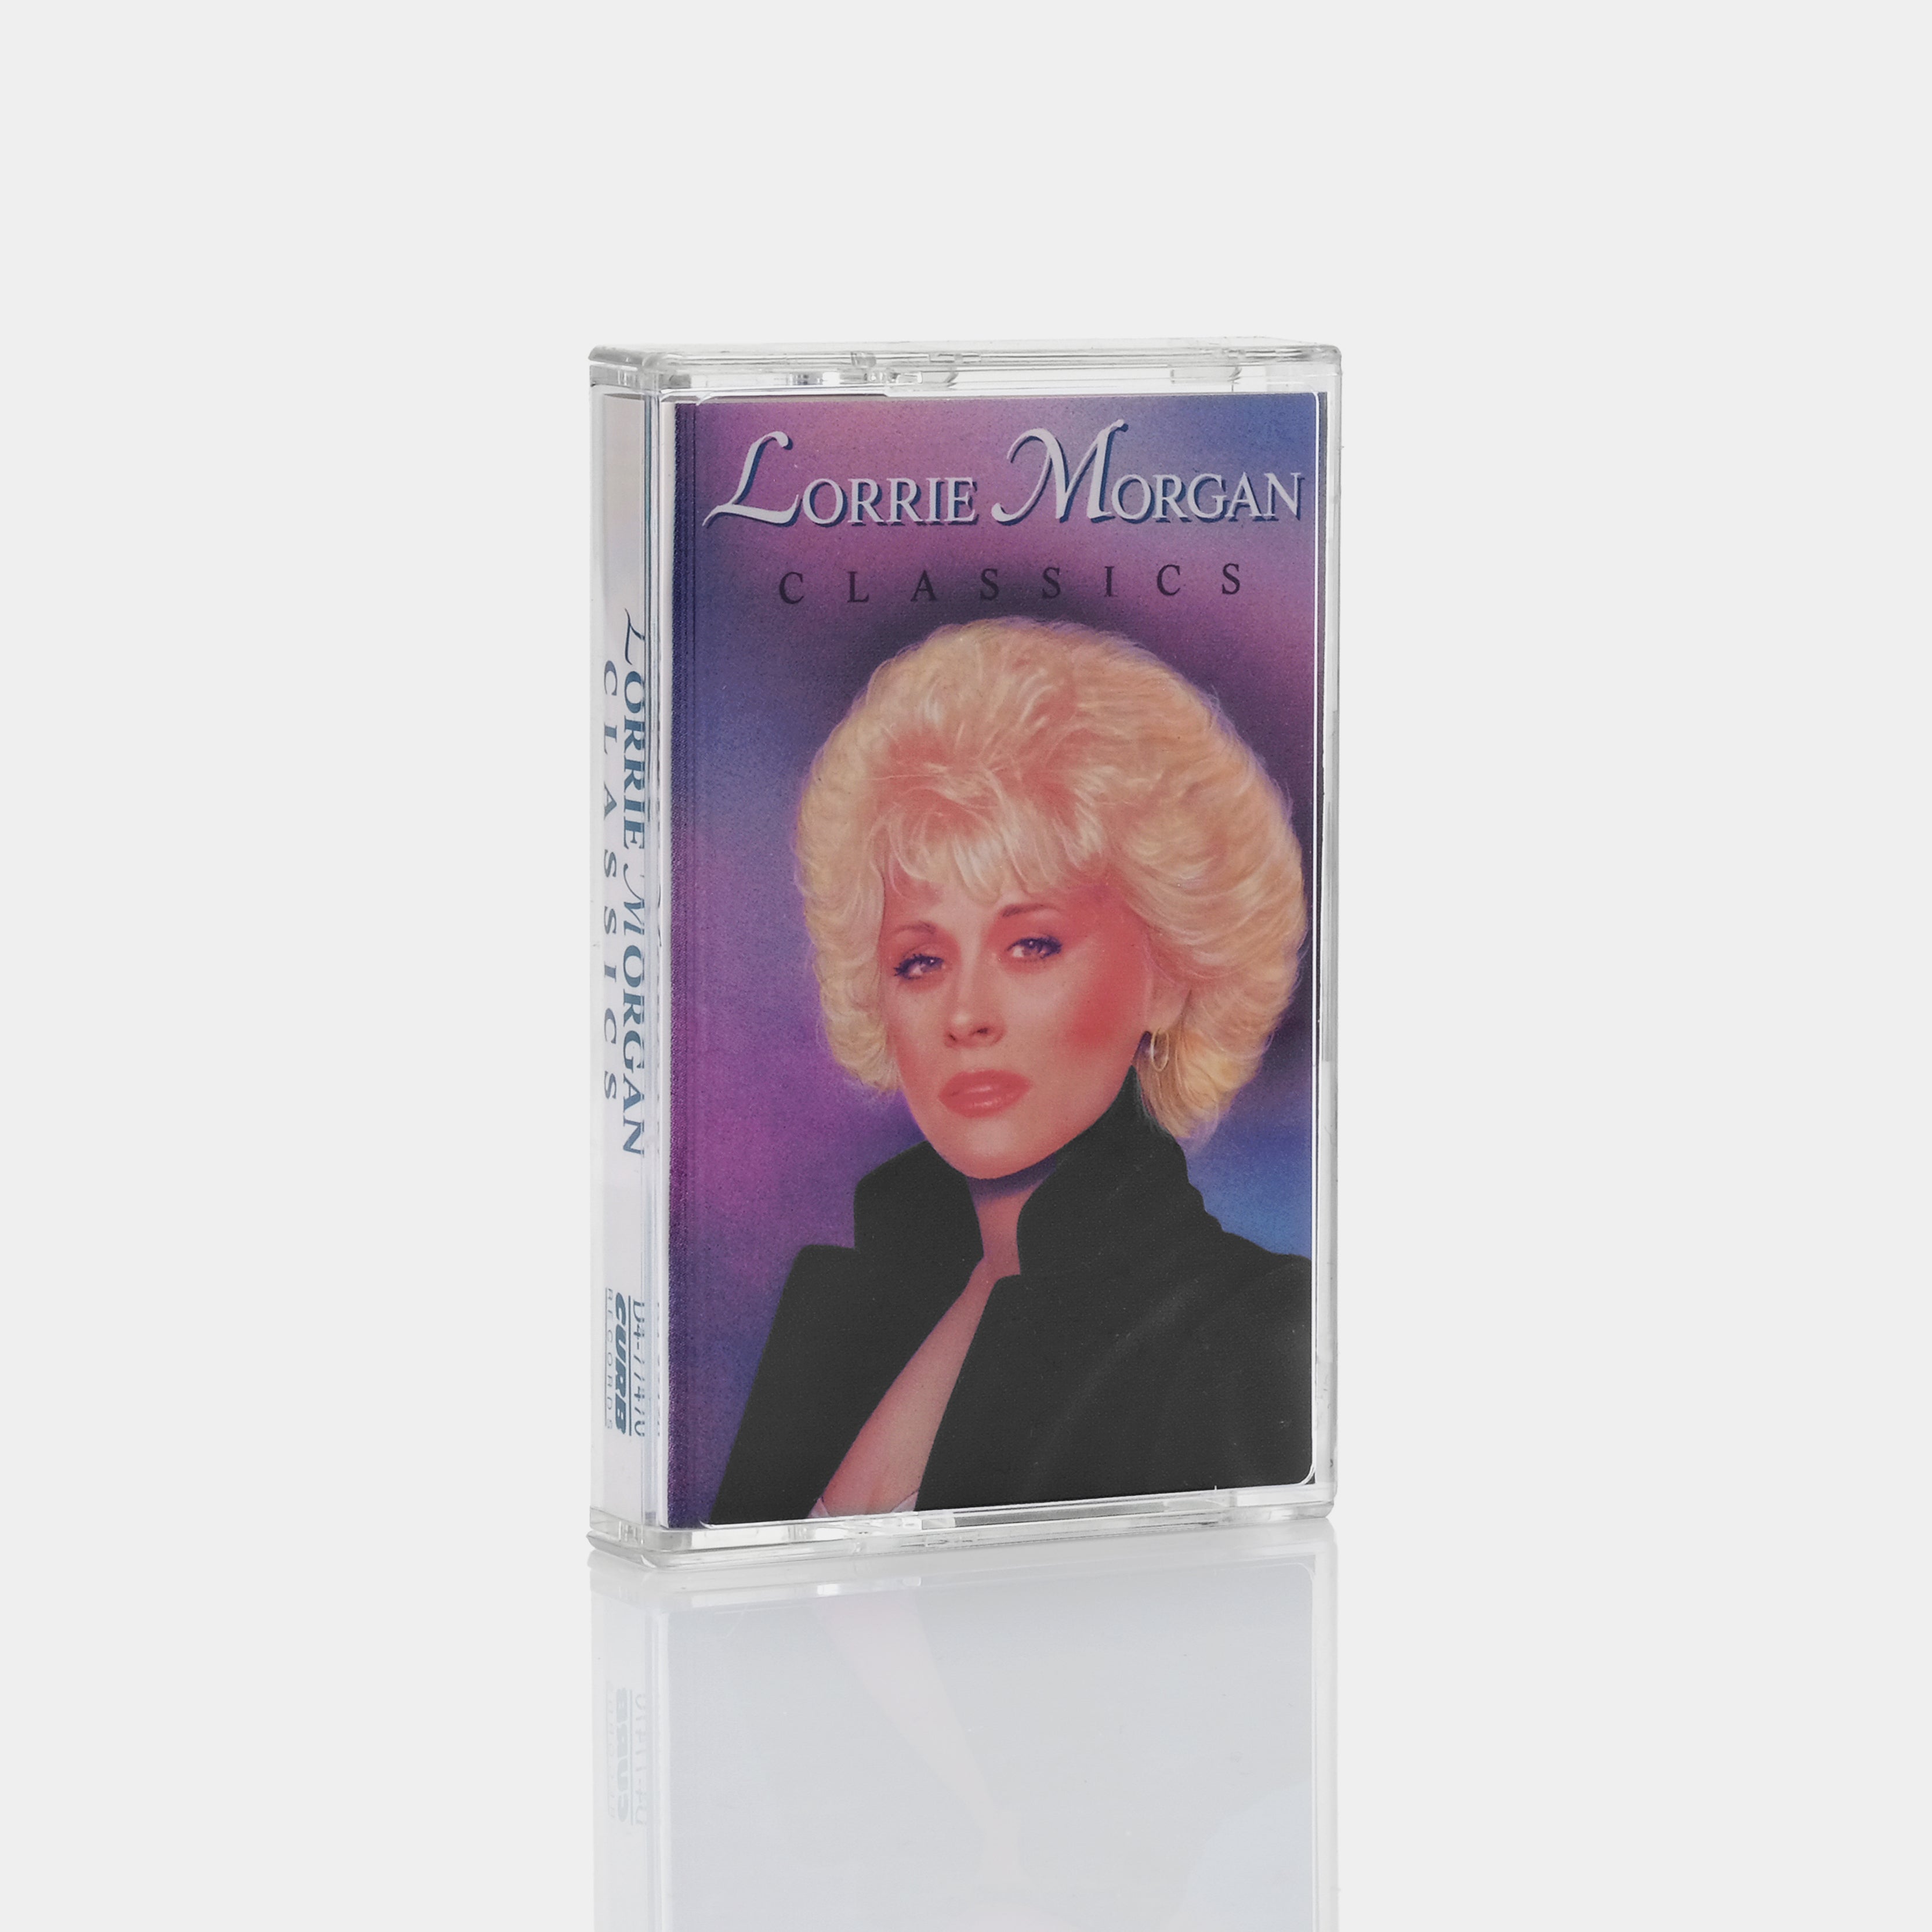 Lorrie Morgan - Classics Cassette Tape